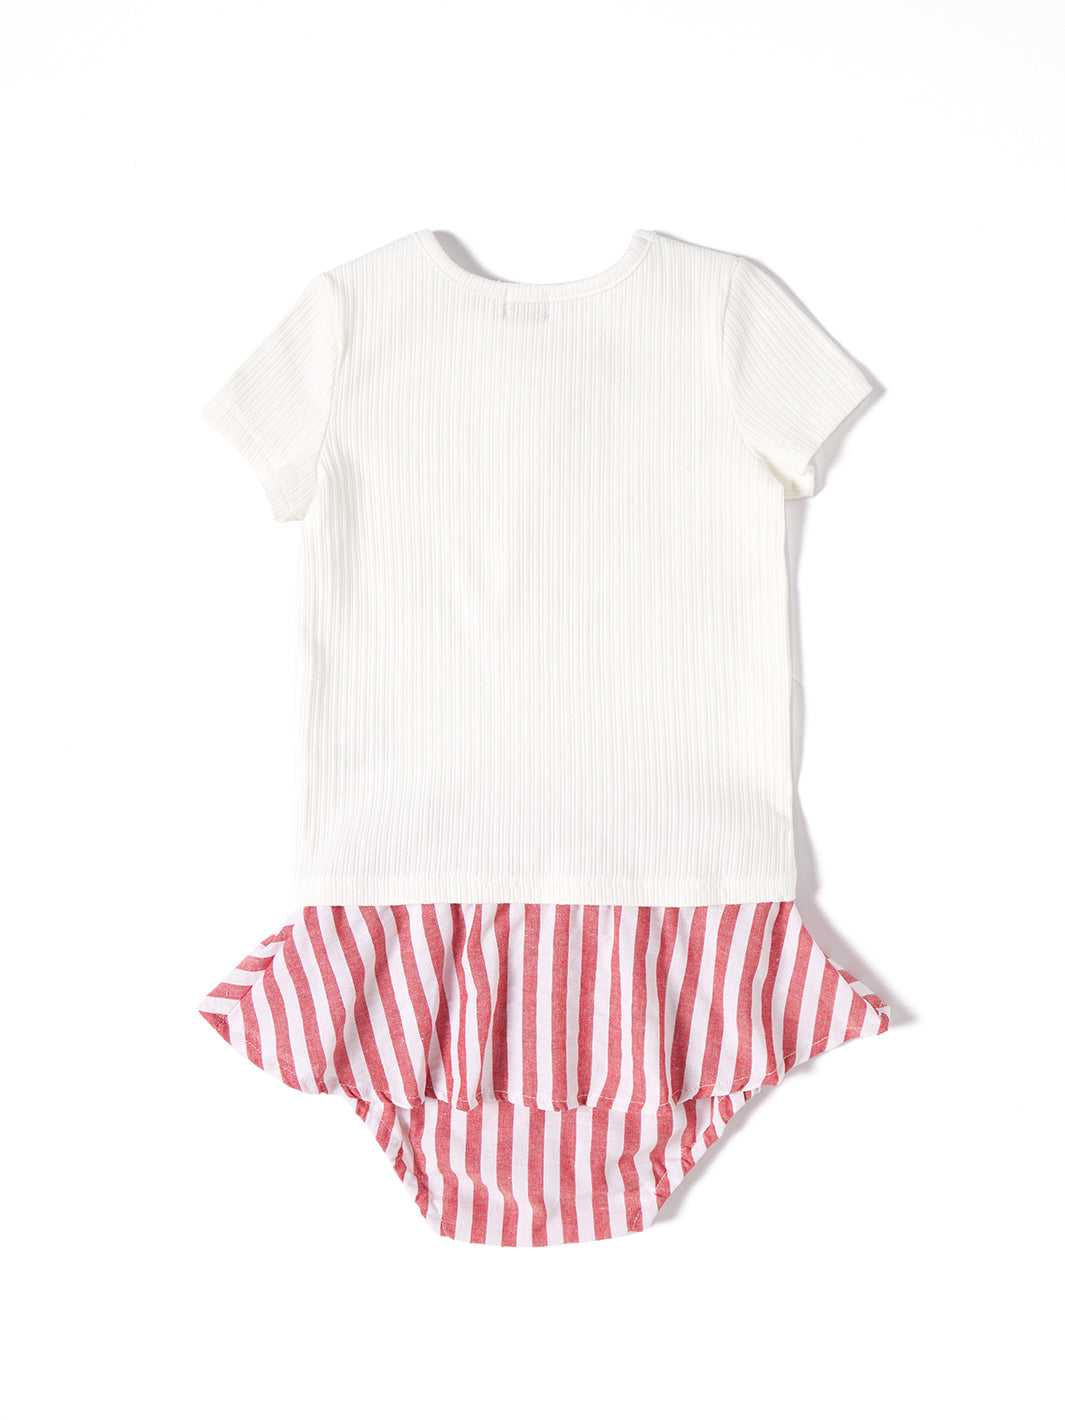 Baby Stripe Set - White/Red